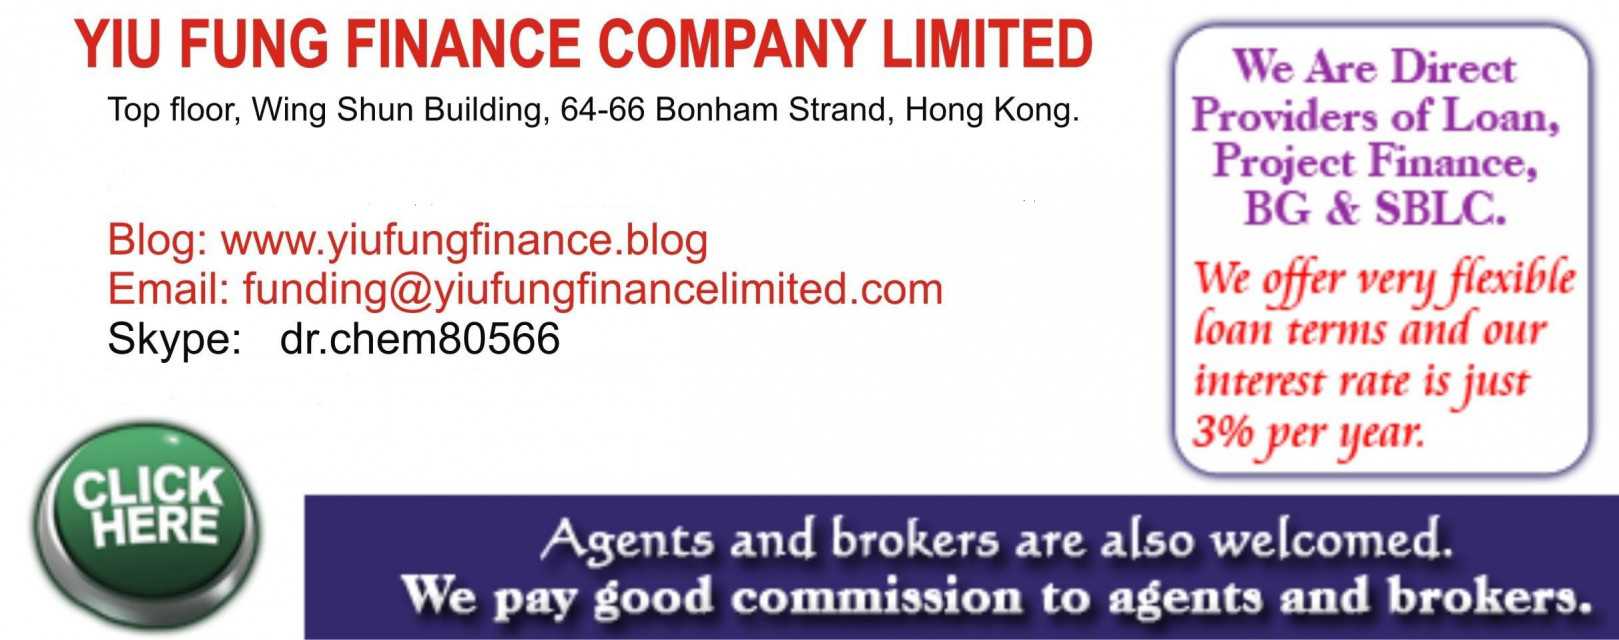 Yiu Fung Finance Company Ltd